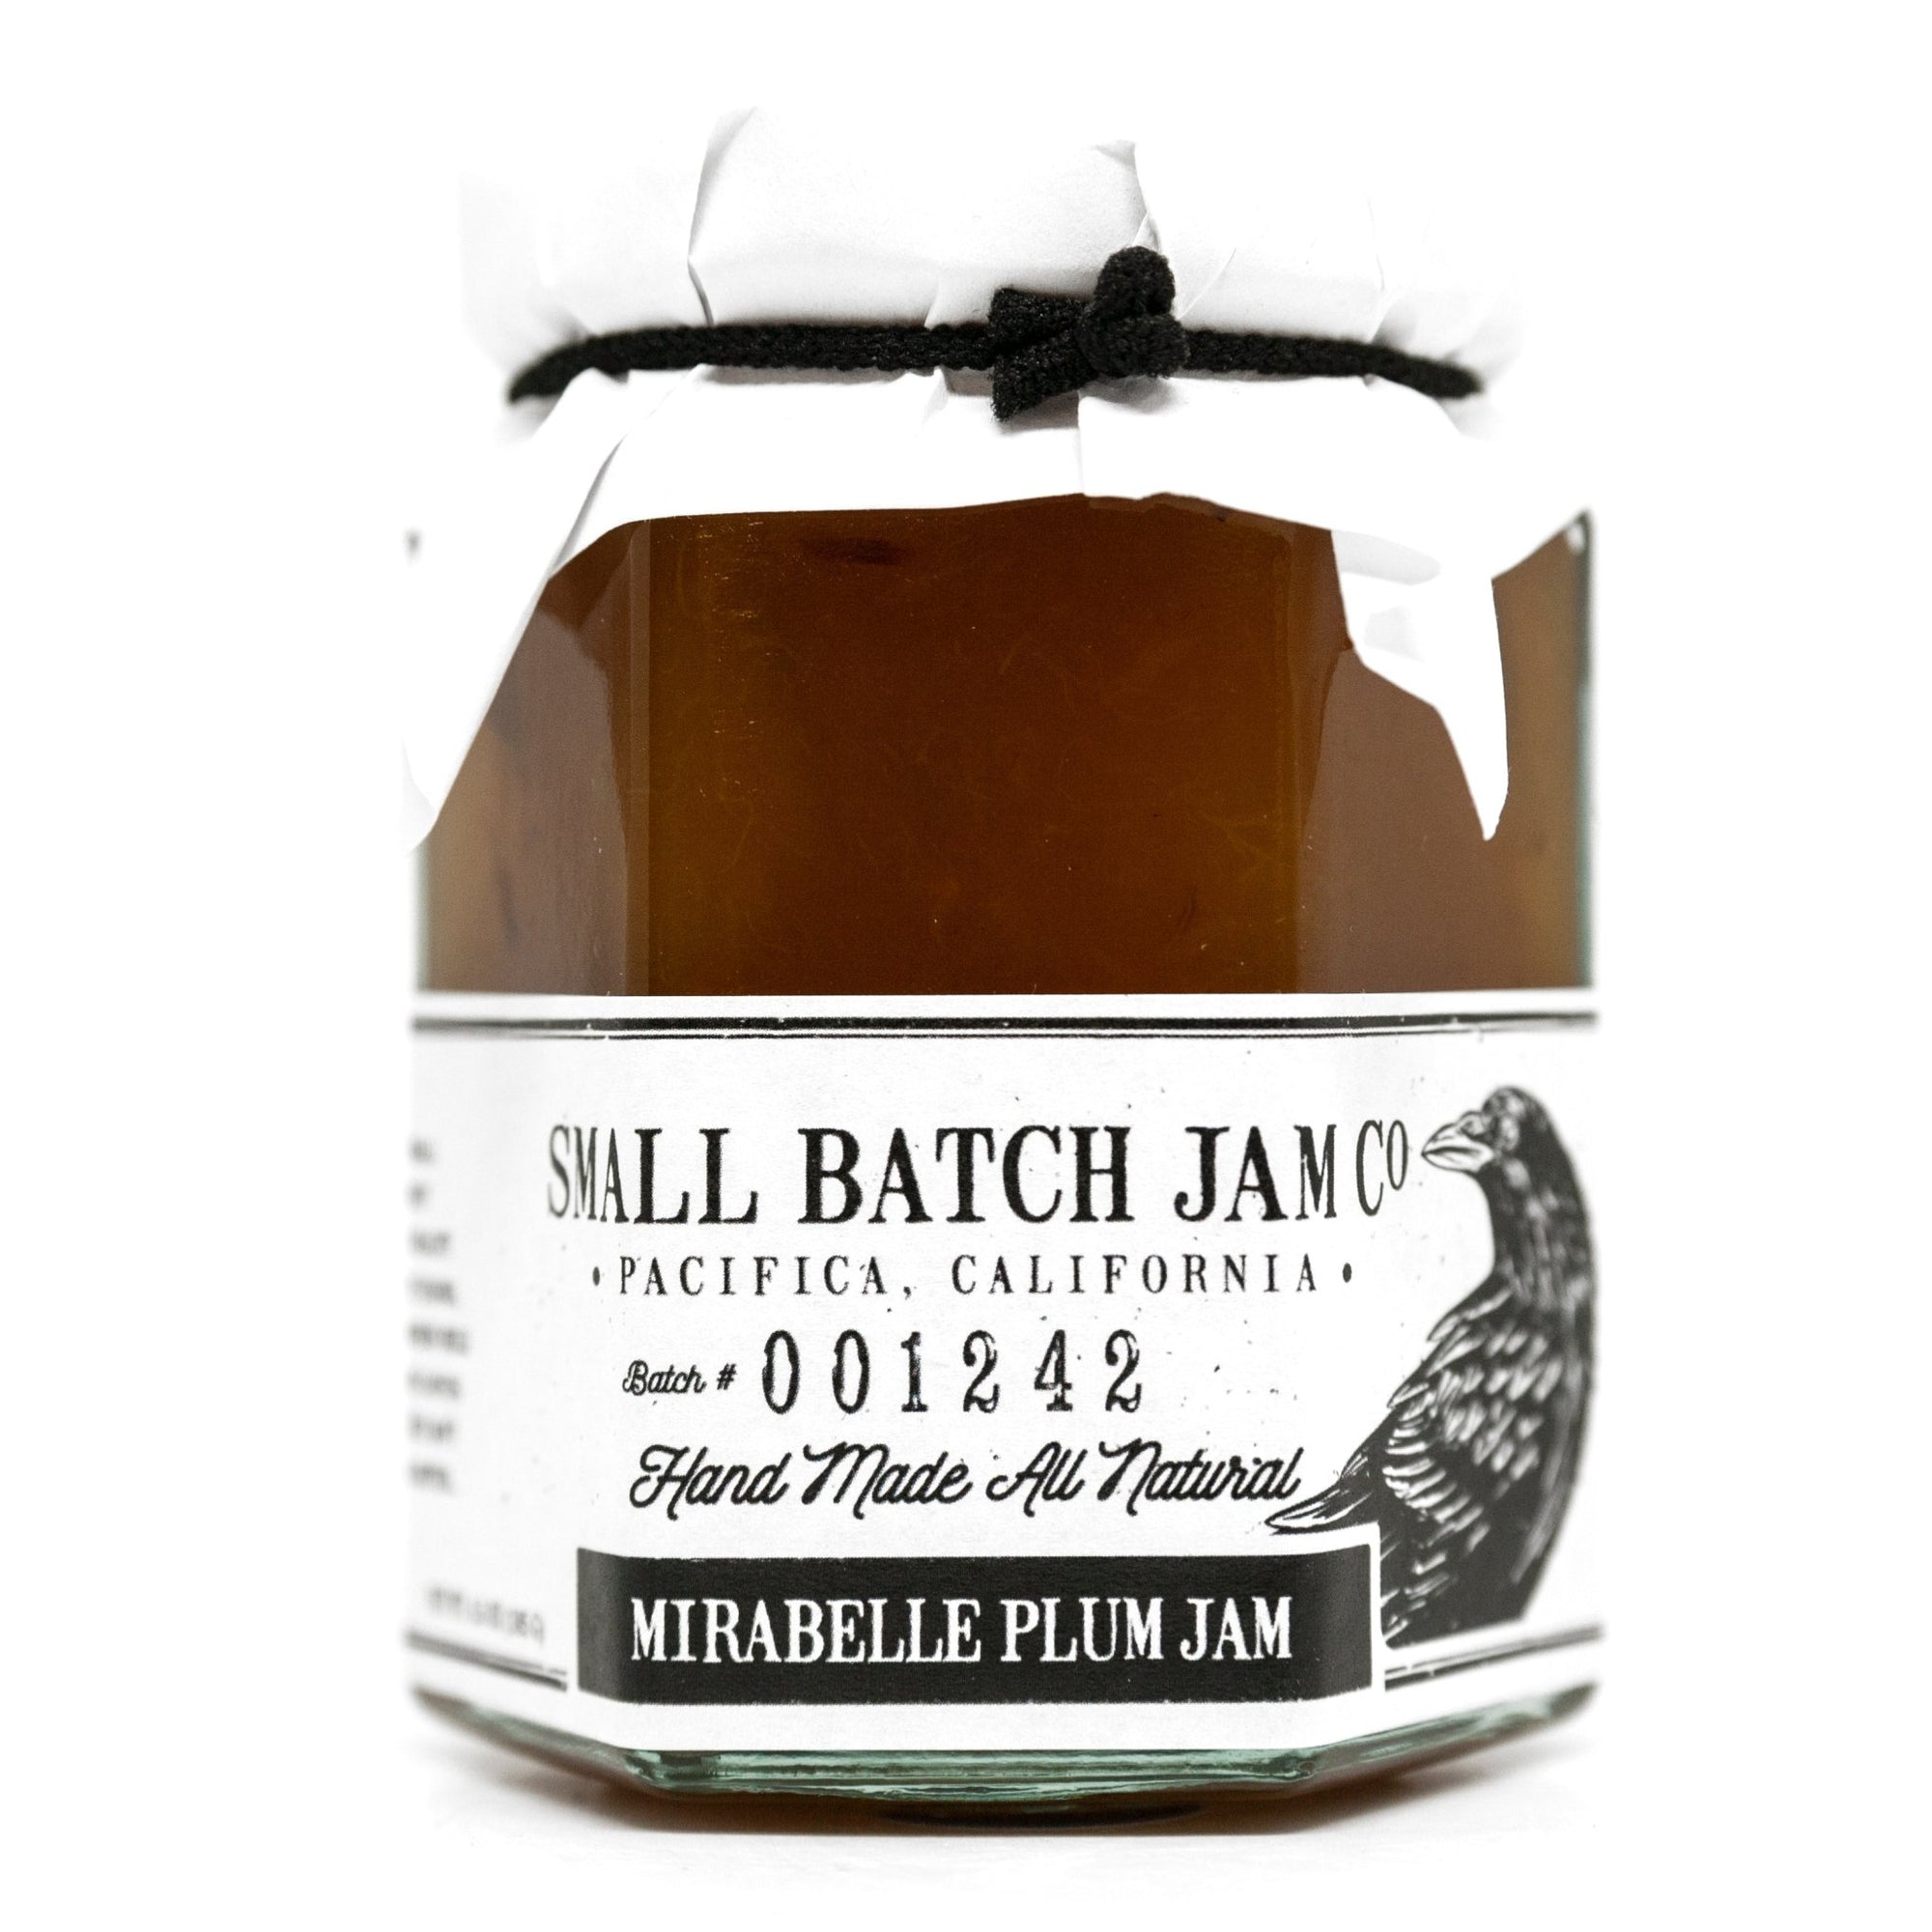 Mirabelle Plum Jam - Small Batch Jam Co